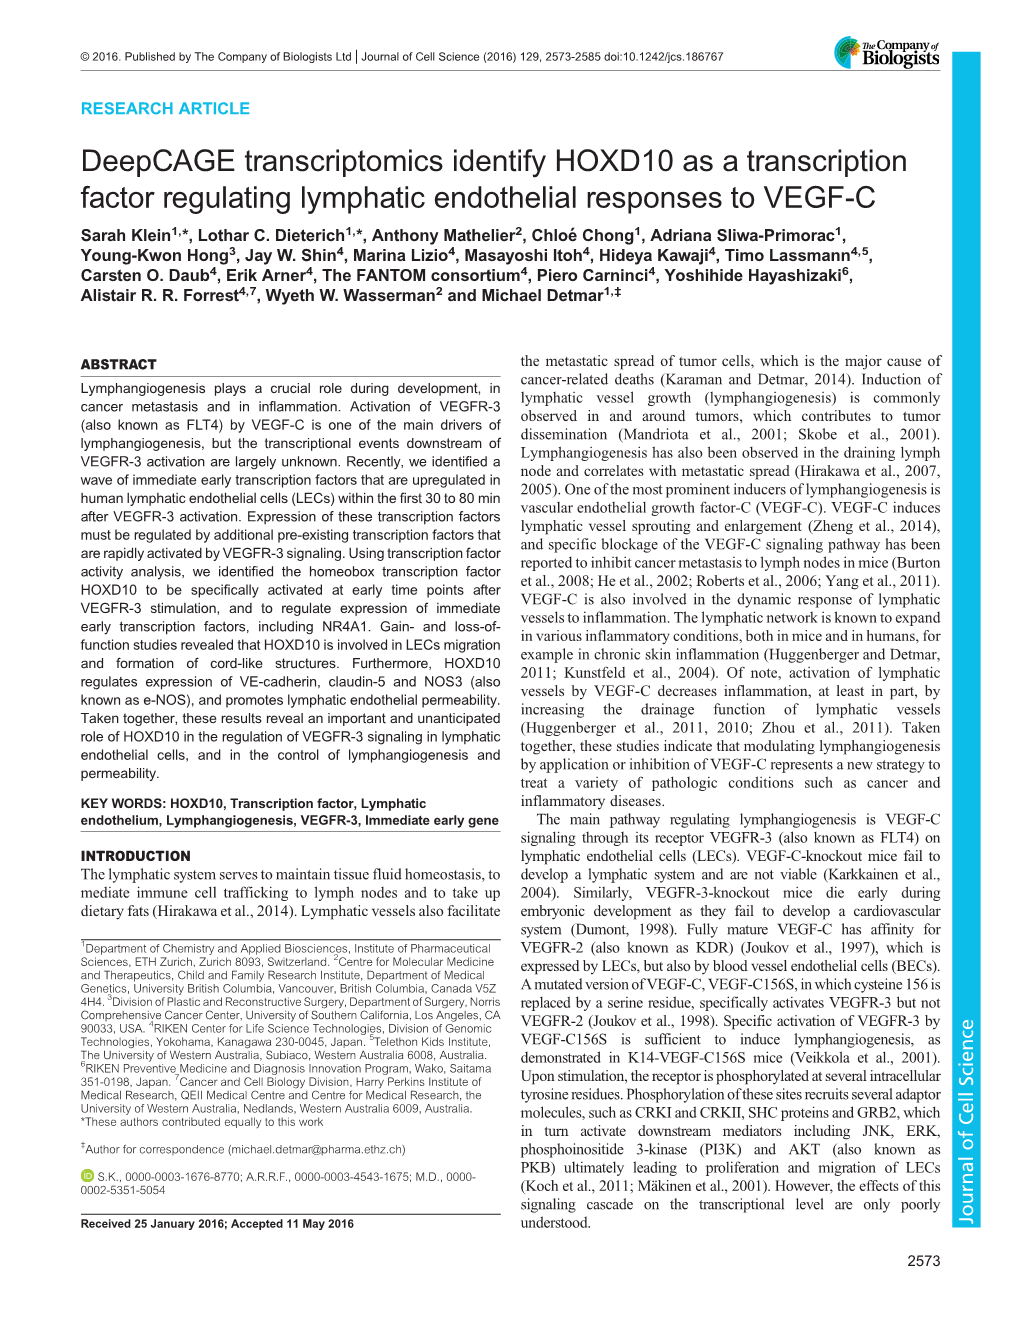 Deepcage Transcriptomics Identify HOXD10 As a Transcription Factor Regulating Lymphatic Endothelial Responses to VEGF-C Sarah Klein1,*, Lothar C